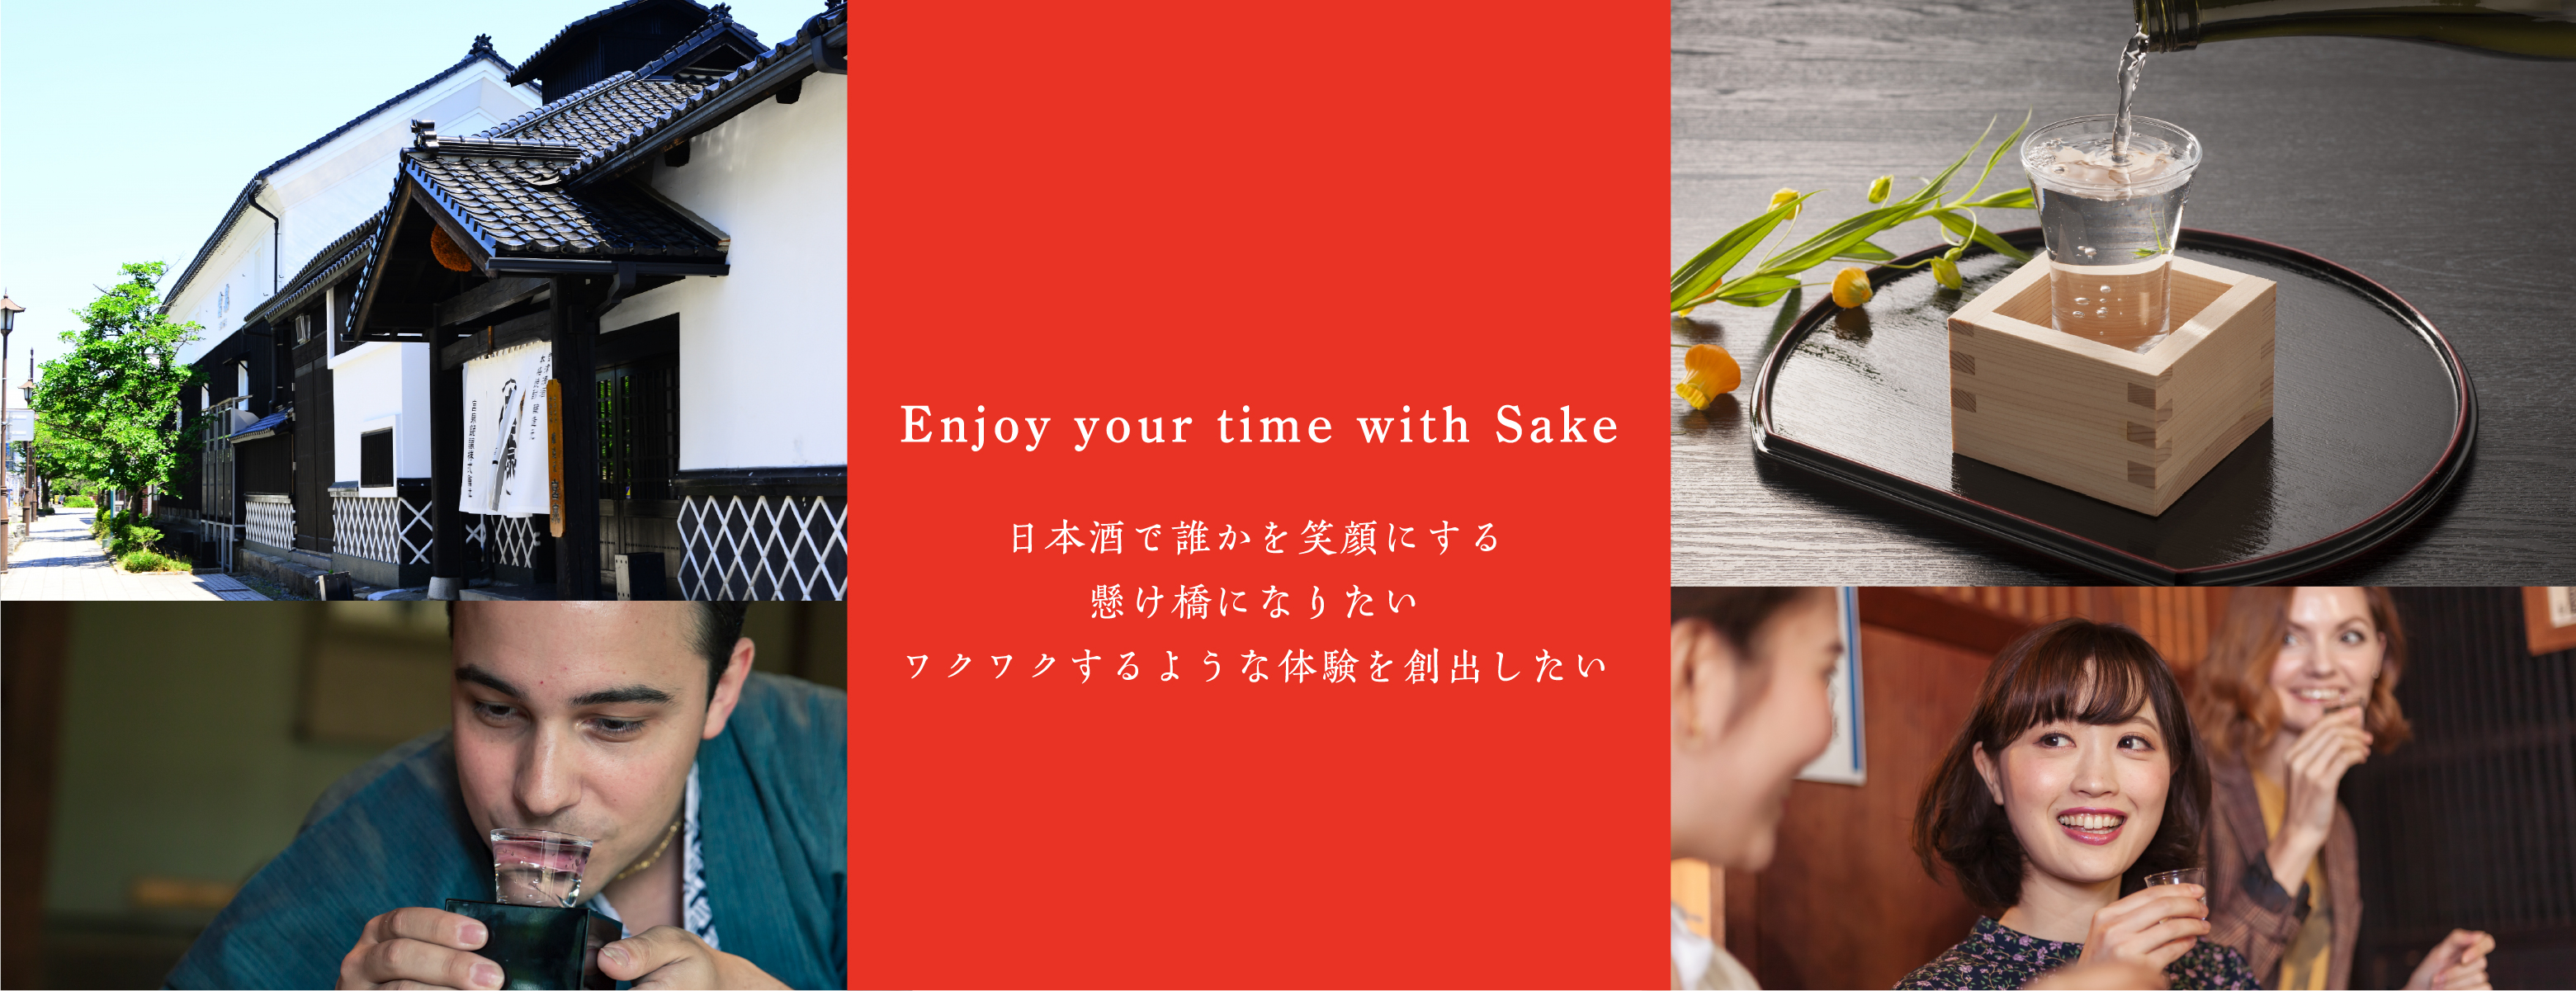 Enjoy your time with Sake